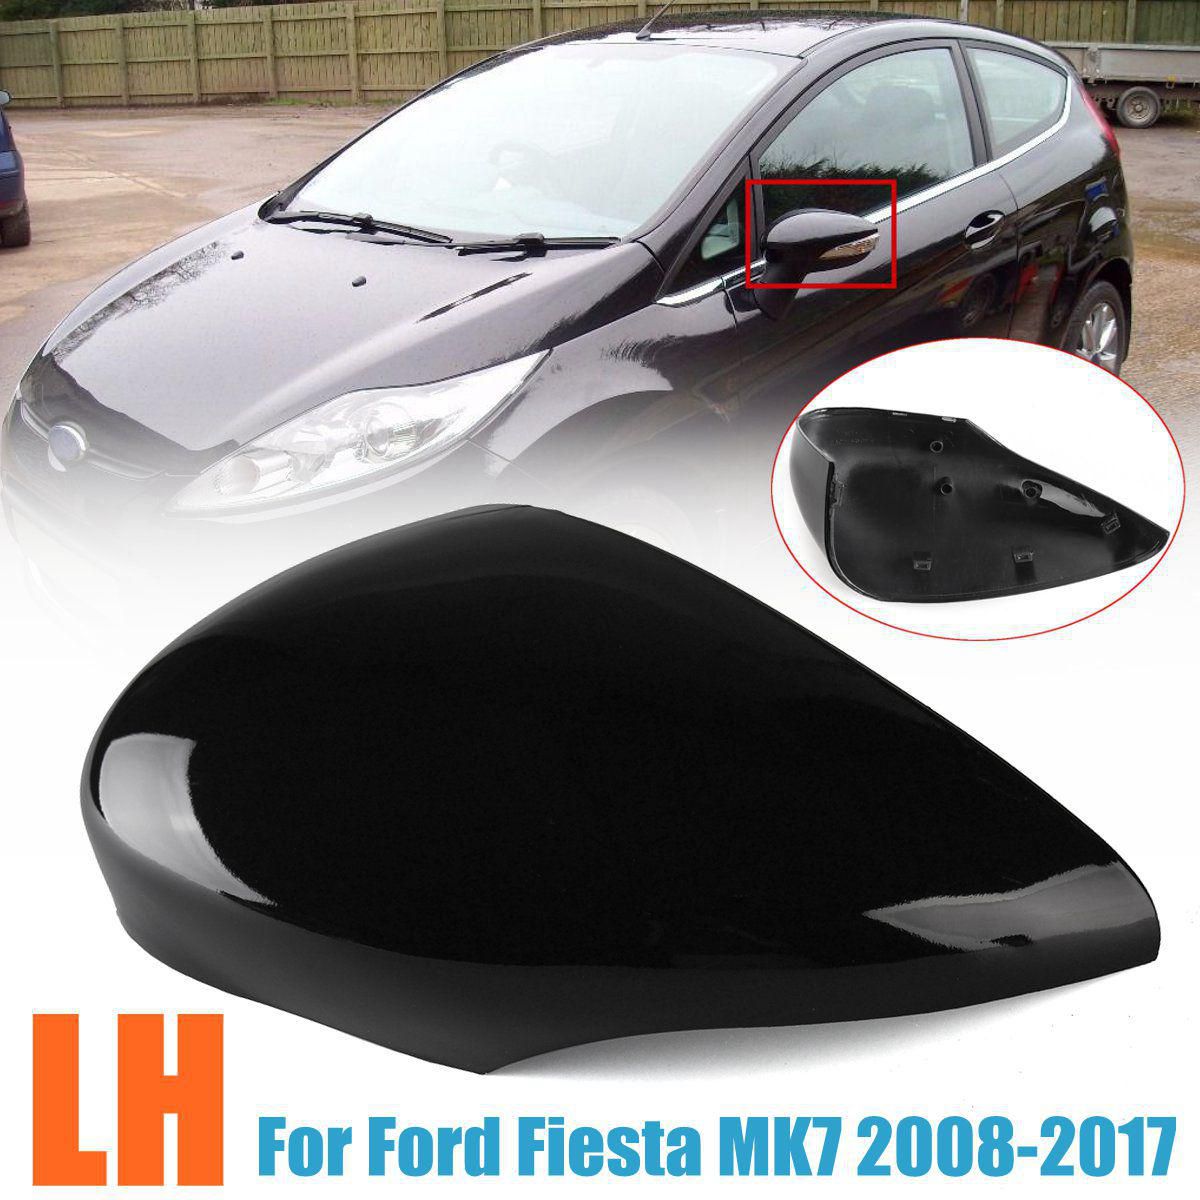 Ford Fiesta Mk7 Hatchback 2008-2012 Wing Mirror Cover Cap Primed Passenger Side